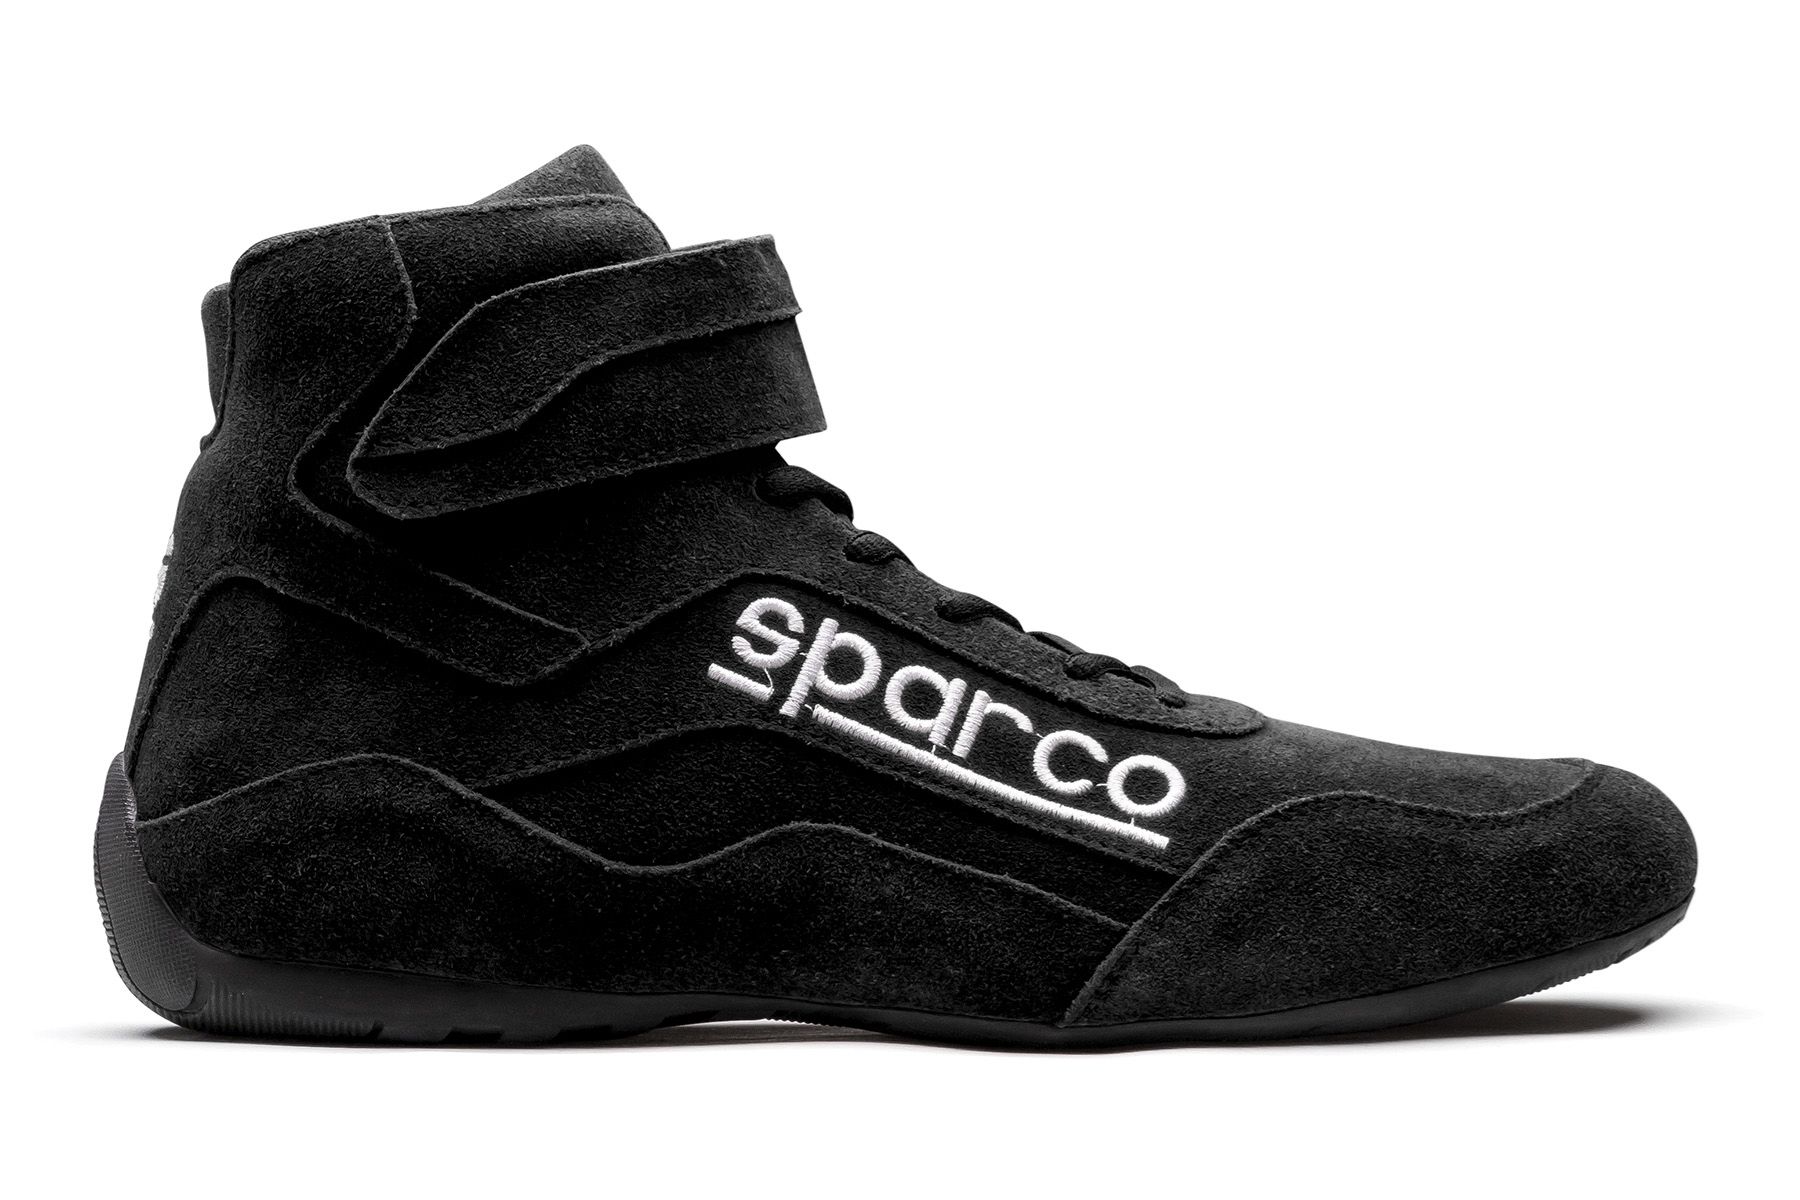 Sparco Race 2 Racing Shoe